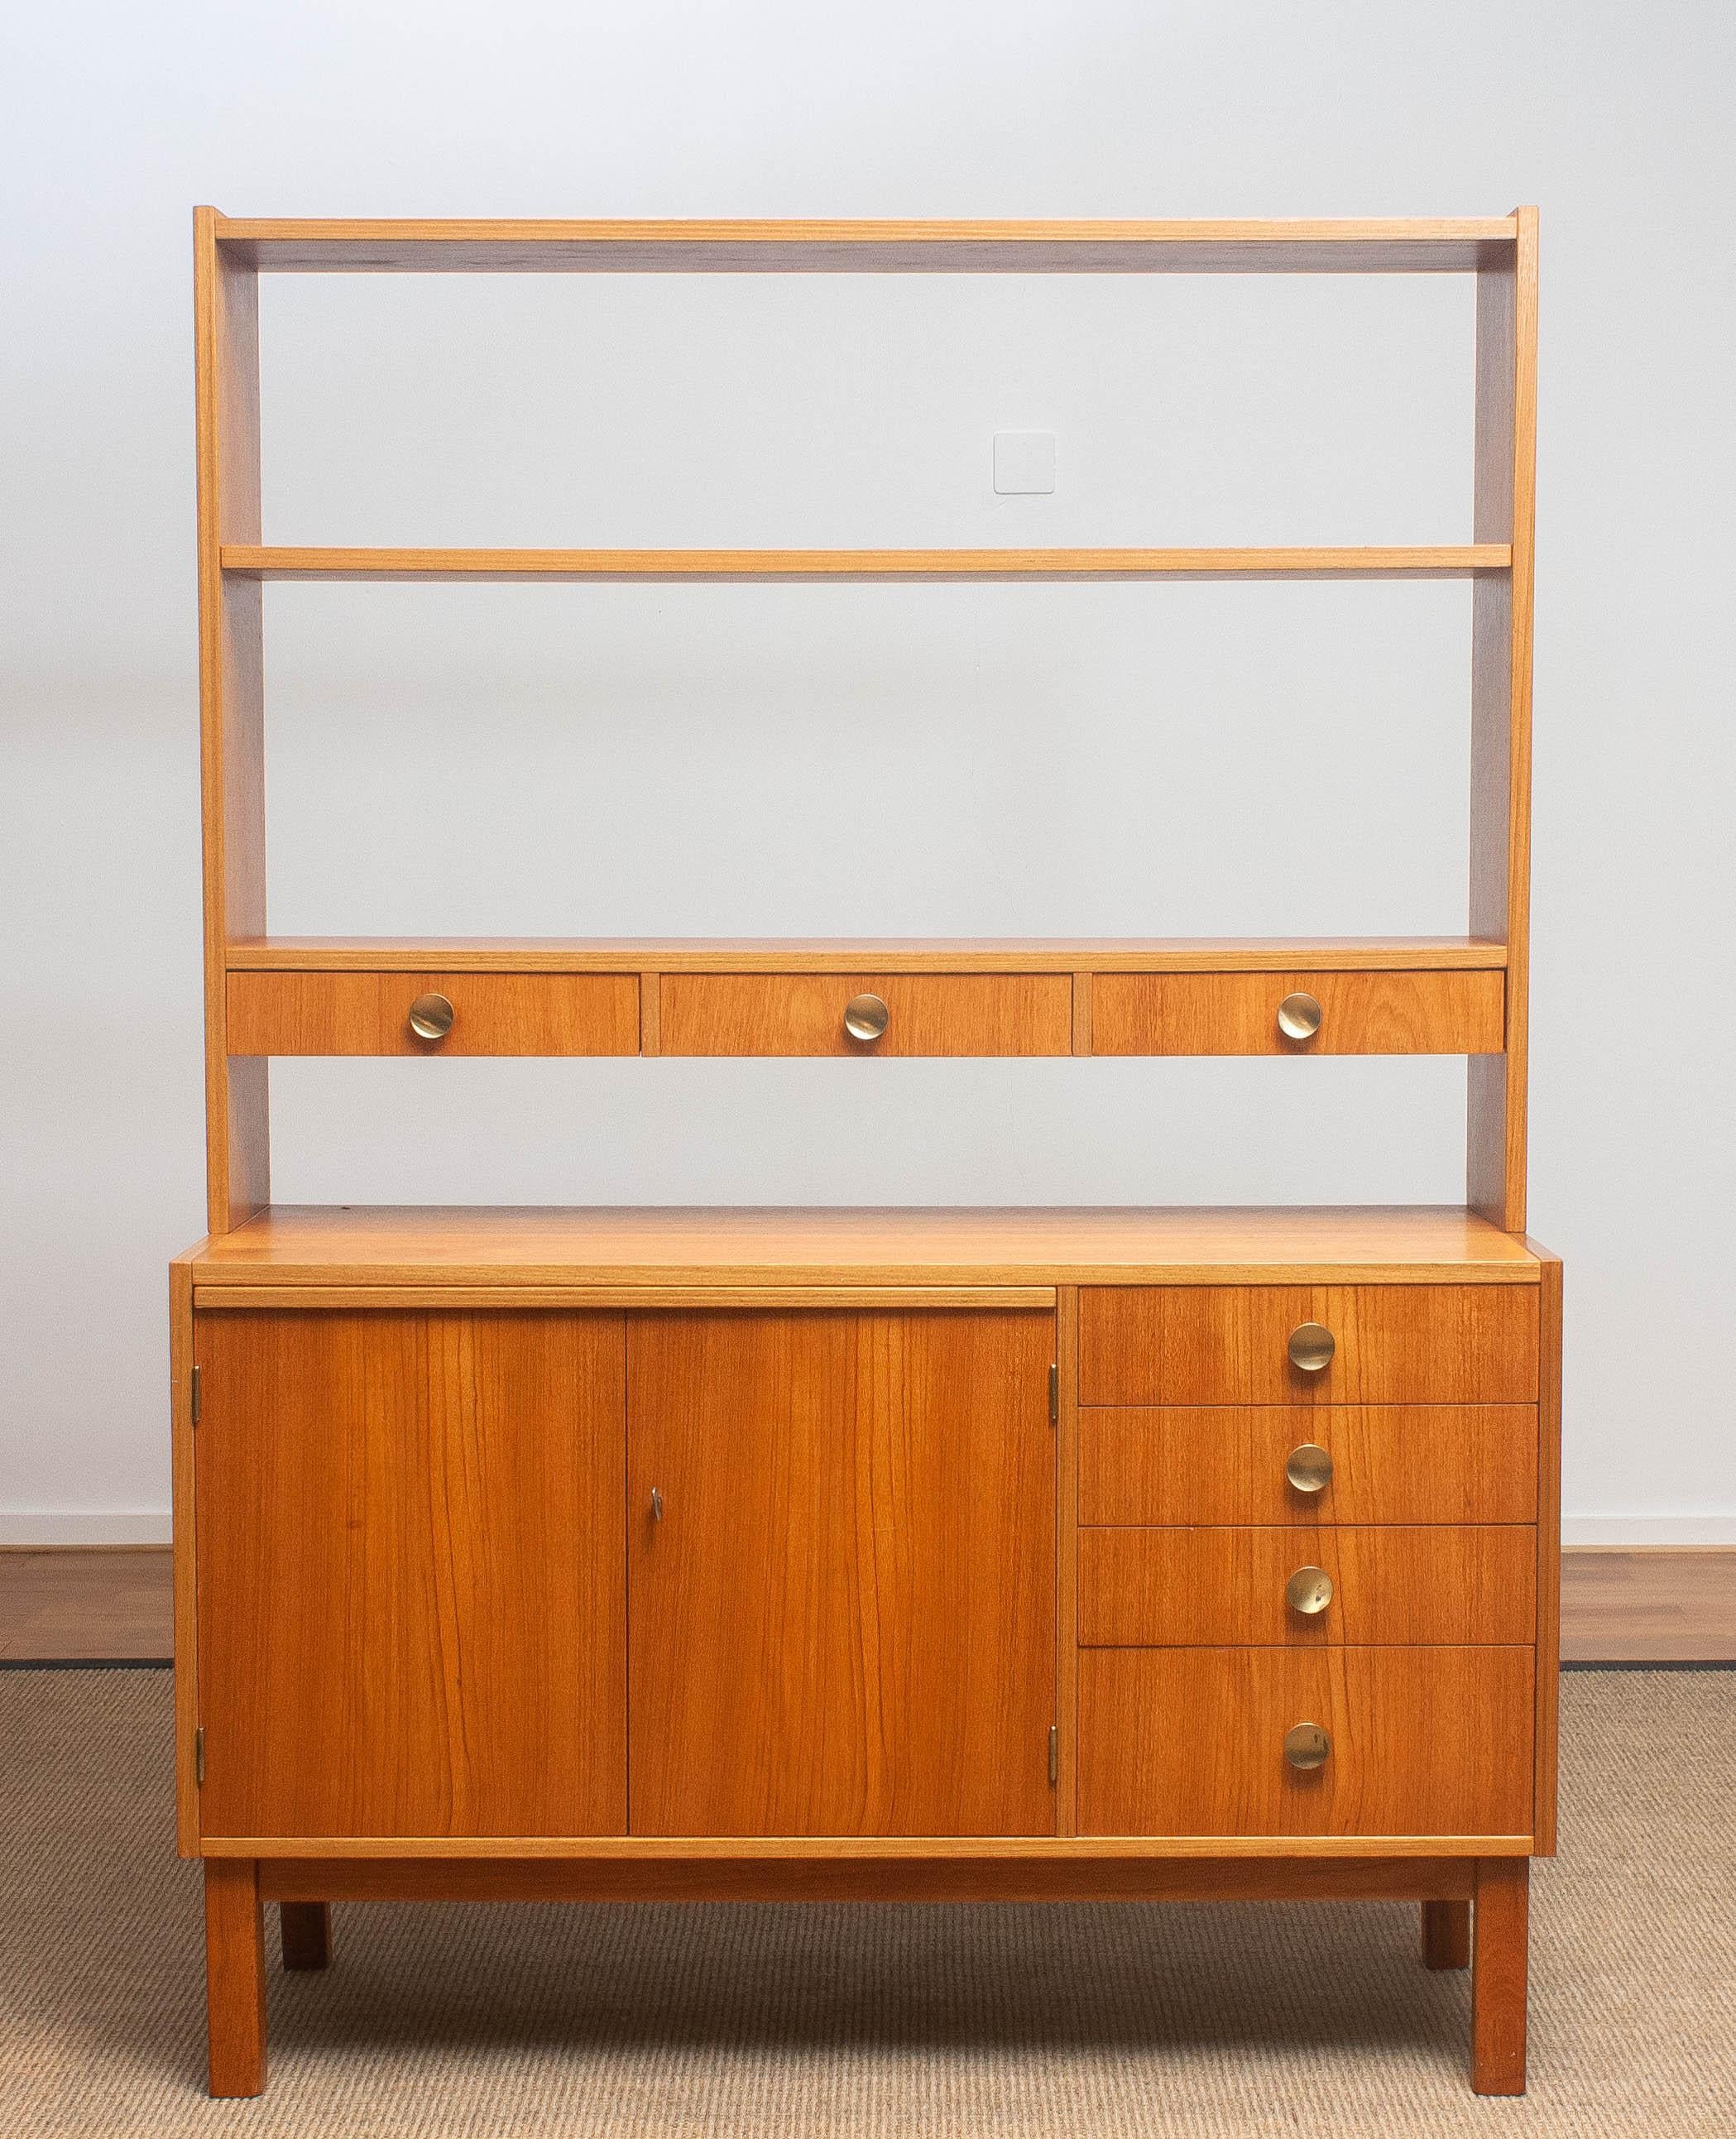 1950s Teak Veneer and Brass Bookshelves Cabinet with Writing Space from Sweden In Good Condition In Silvolde, Gelderland